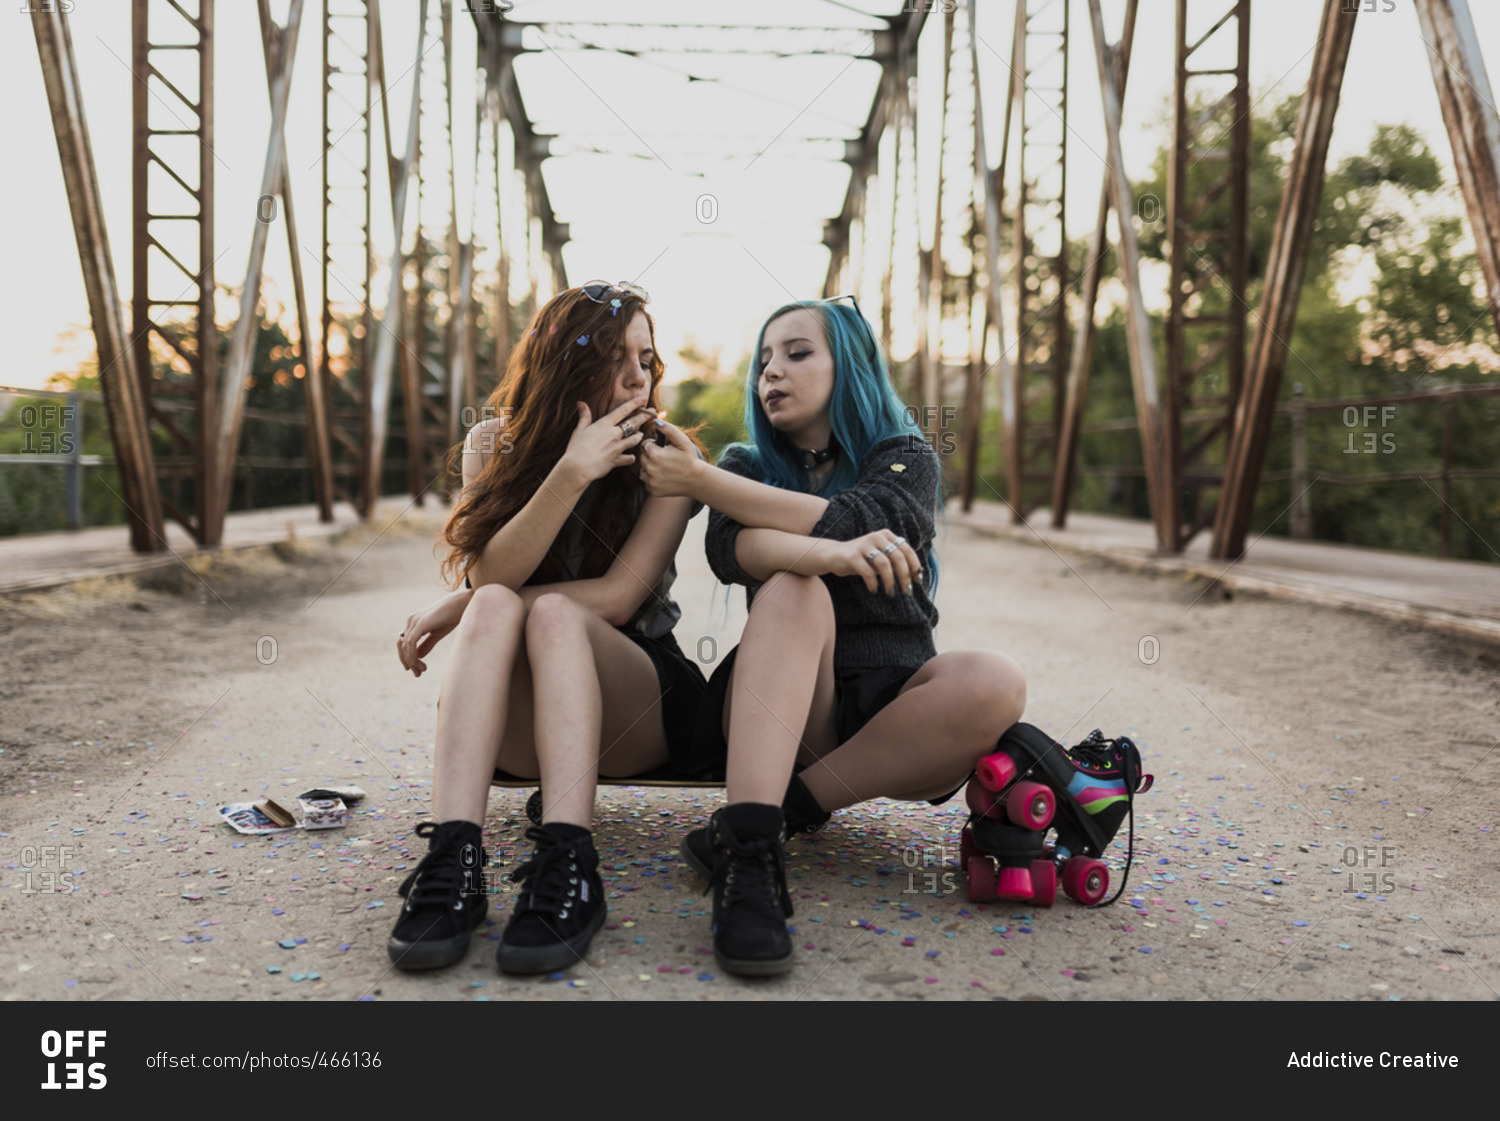 Teen punk girl sitting on skateboard on a bridge lighting her friend's cigarette